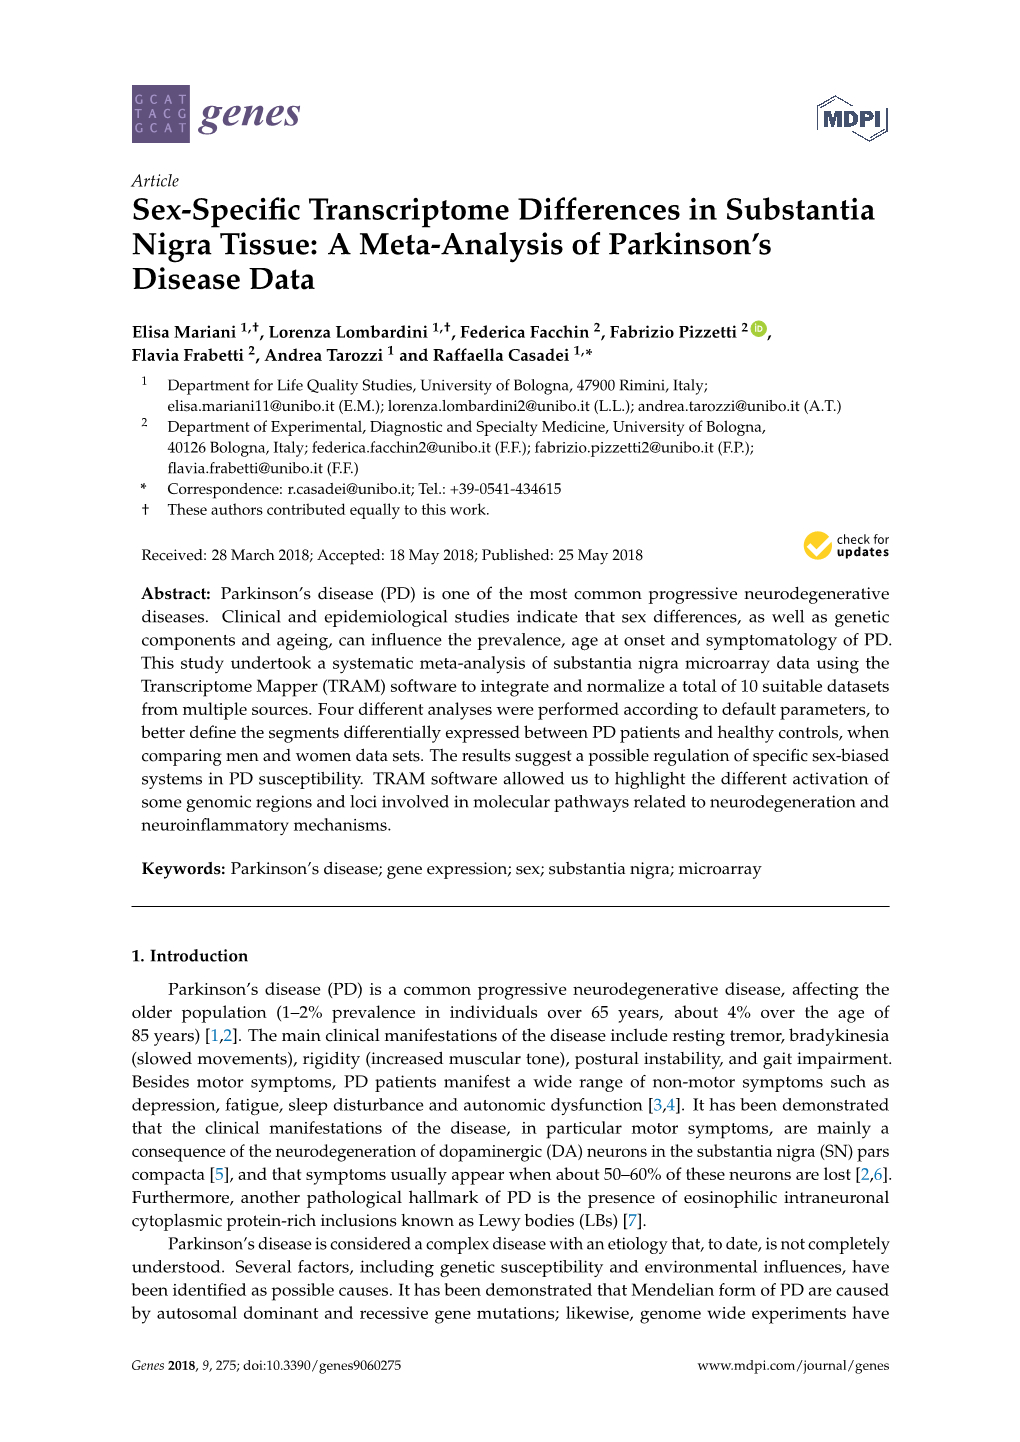 A Meta-Analysis of Parkinson's Disease Data